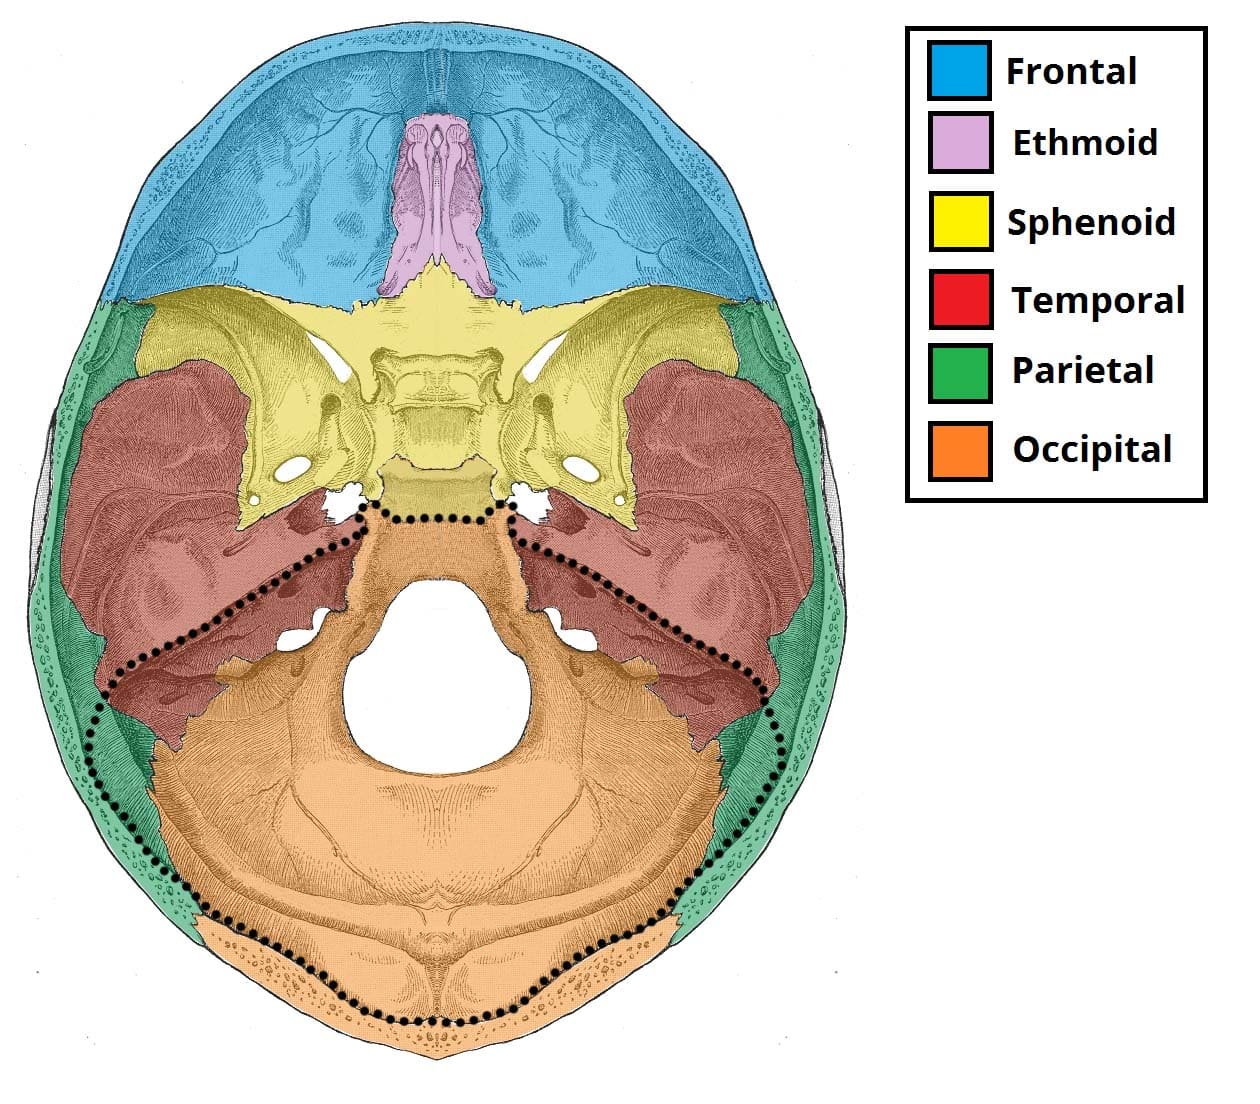 posterior-cranial-fossa-boundaries-contents-teachmeanatomy